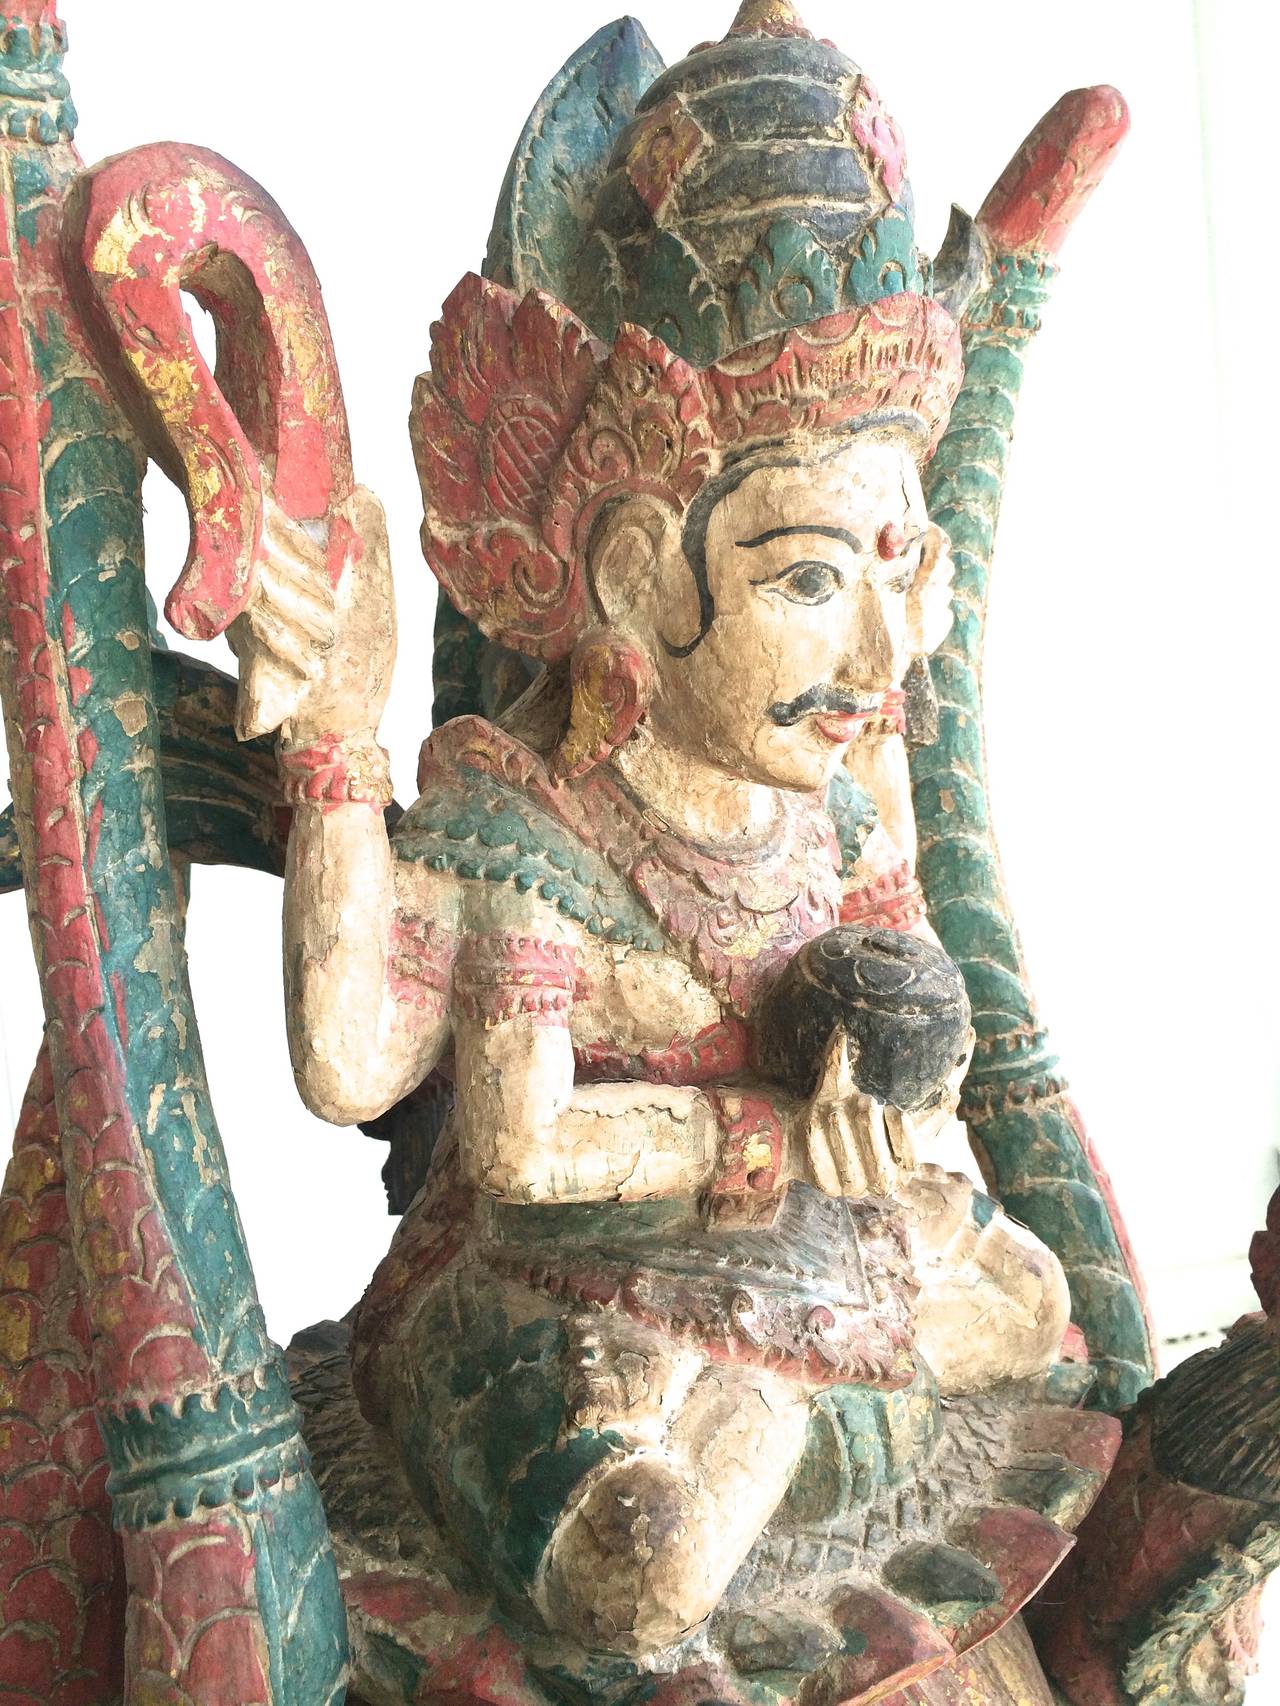 Antique Balinese Wooden Sculpture Vishnu Riding Dragon Serpents.
Rare late 19th century Balinese Temple sculpture, wood polychrome paint, four detachable dragons serpents. Original condition some paint loss.